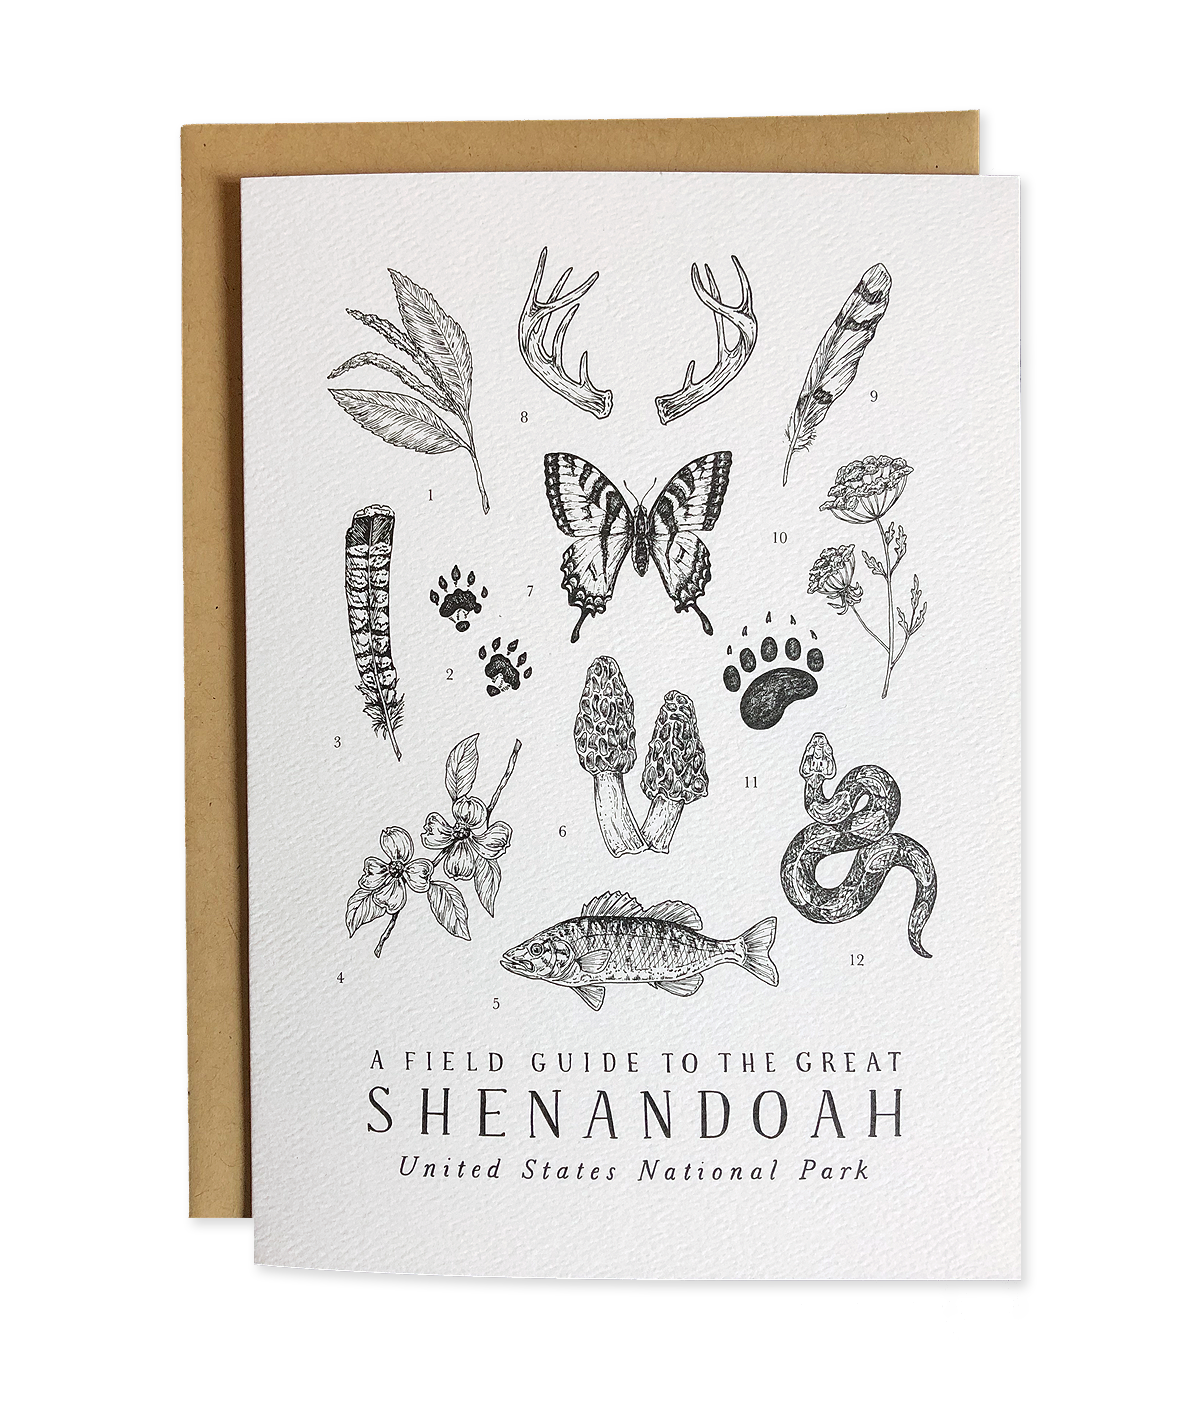 Shenandoah National Park Field Guide Greeting Card